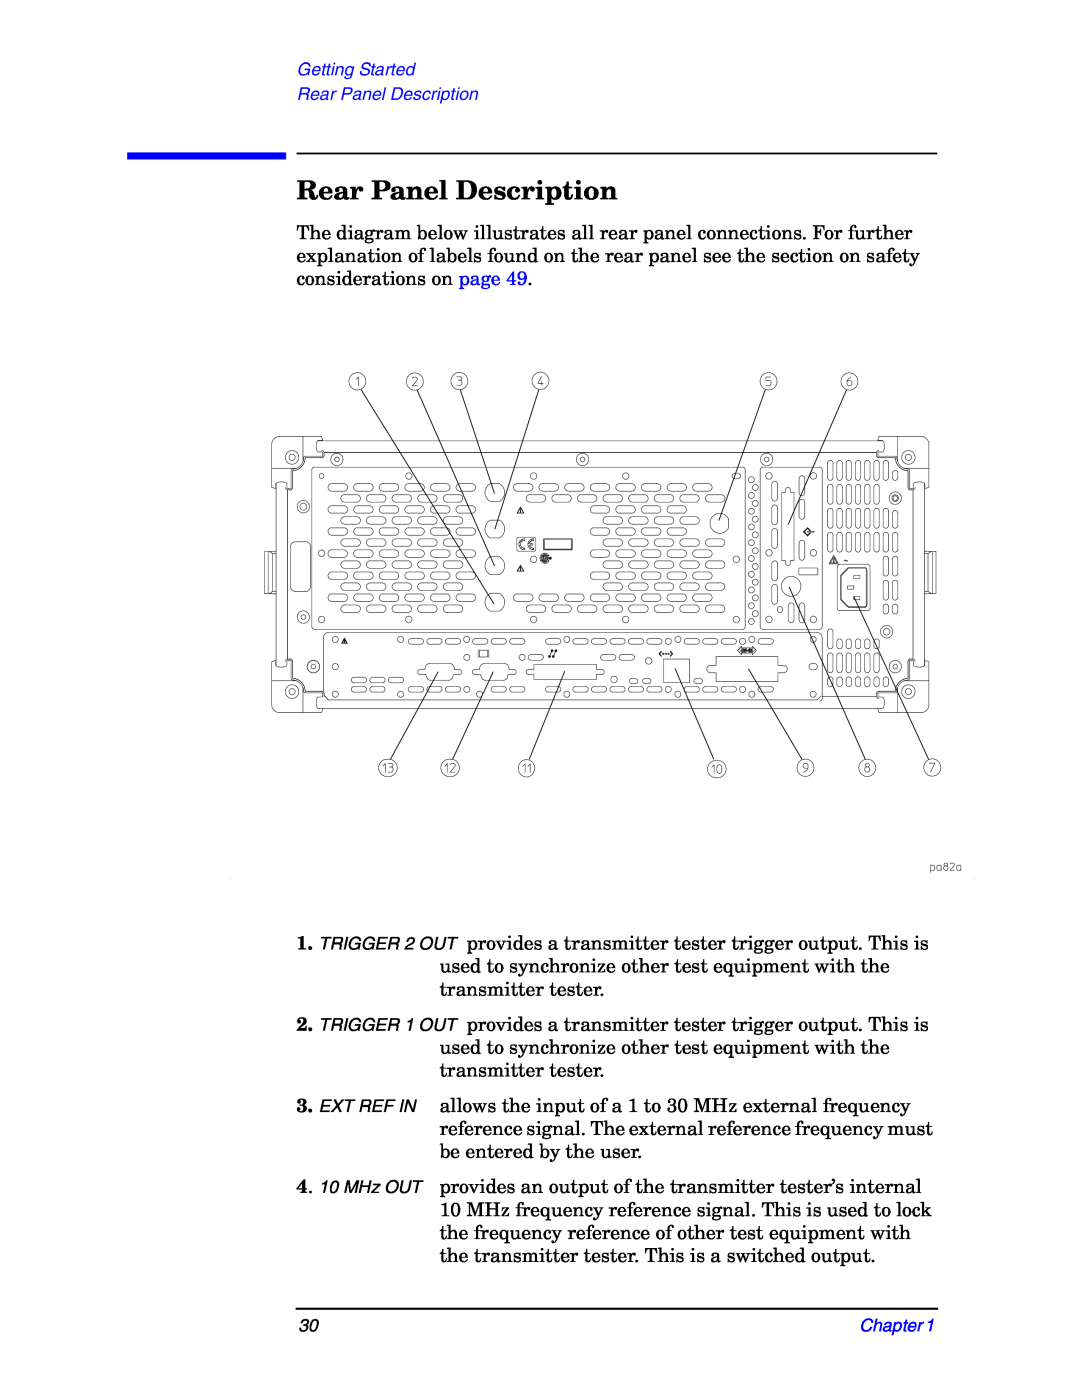 Agilent Technologies E4406A manual Getting Started Rear Panel Description, Chapter 